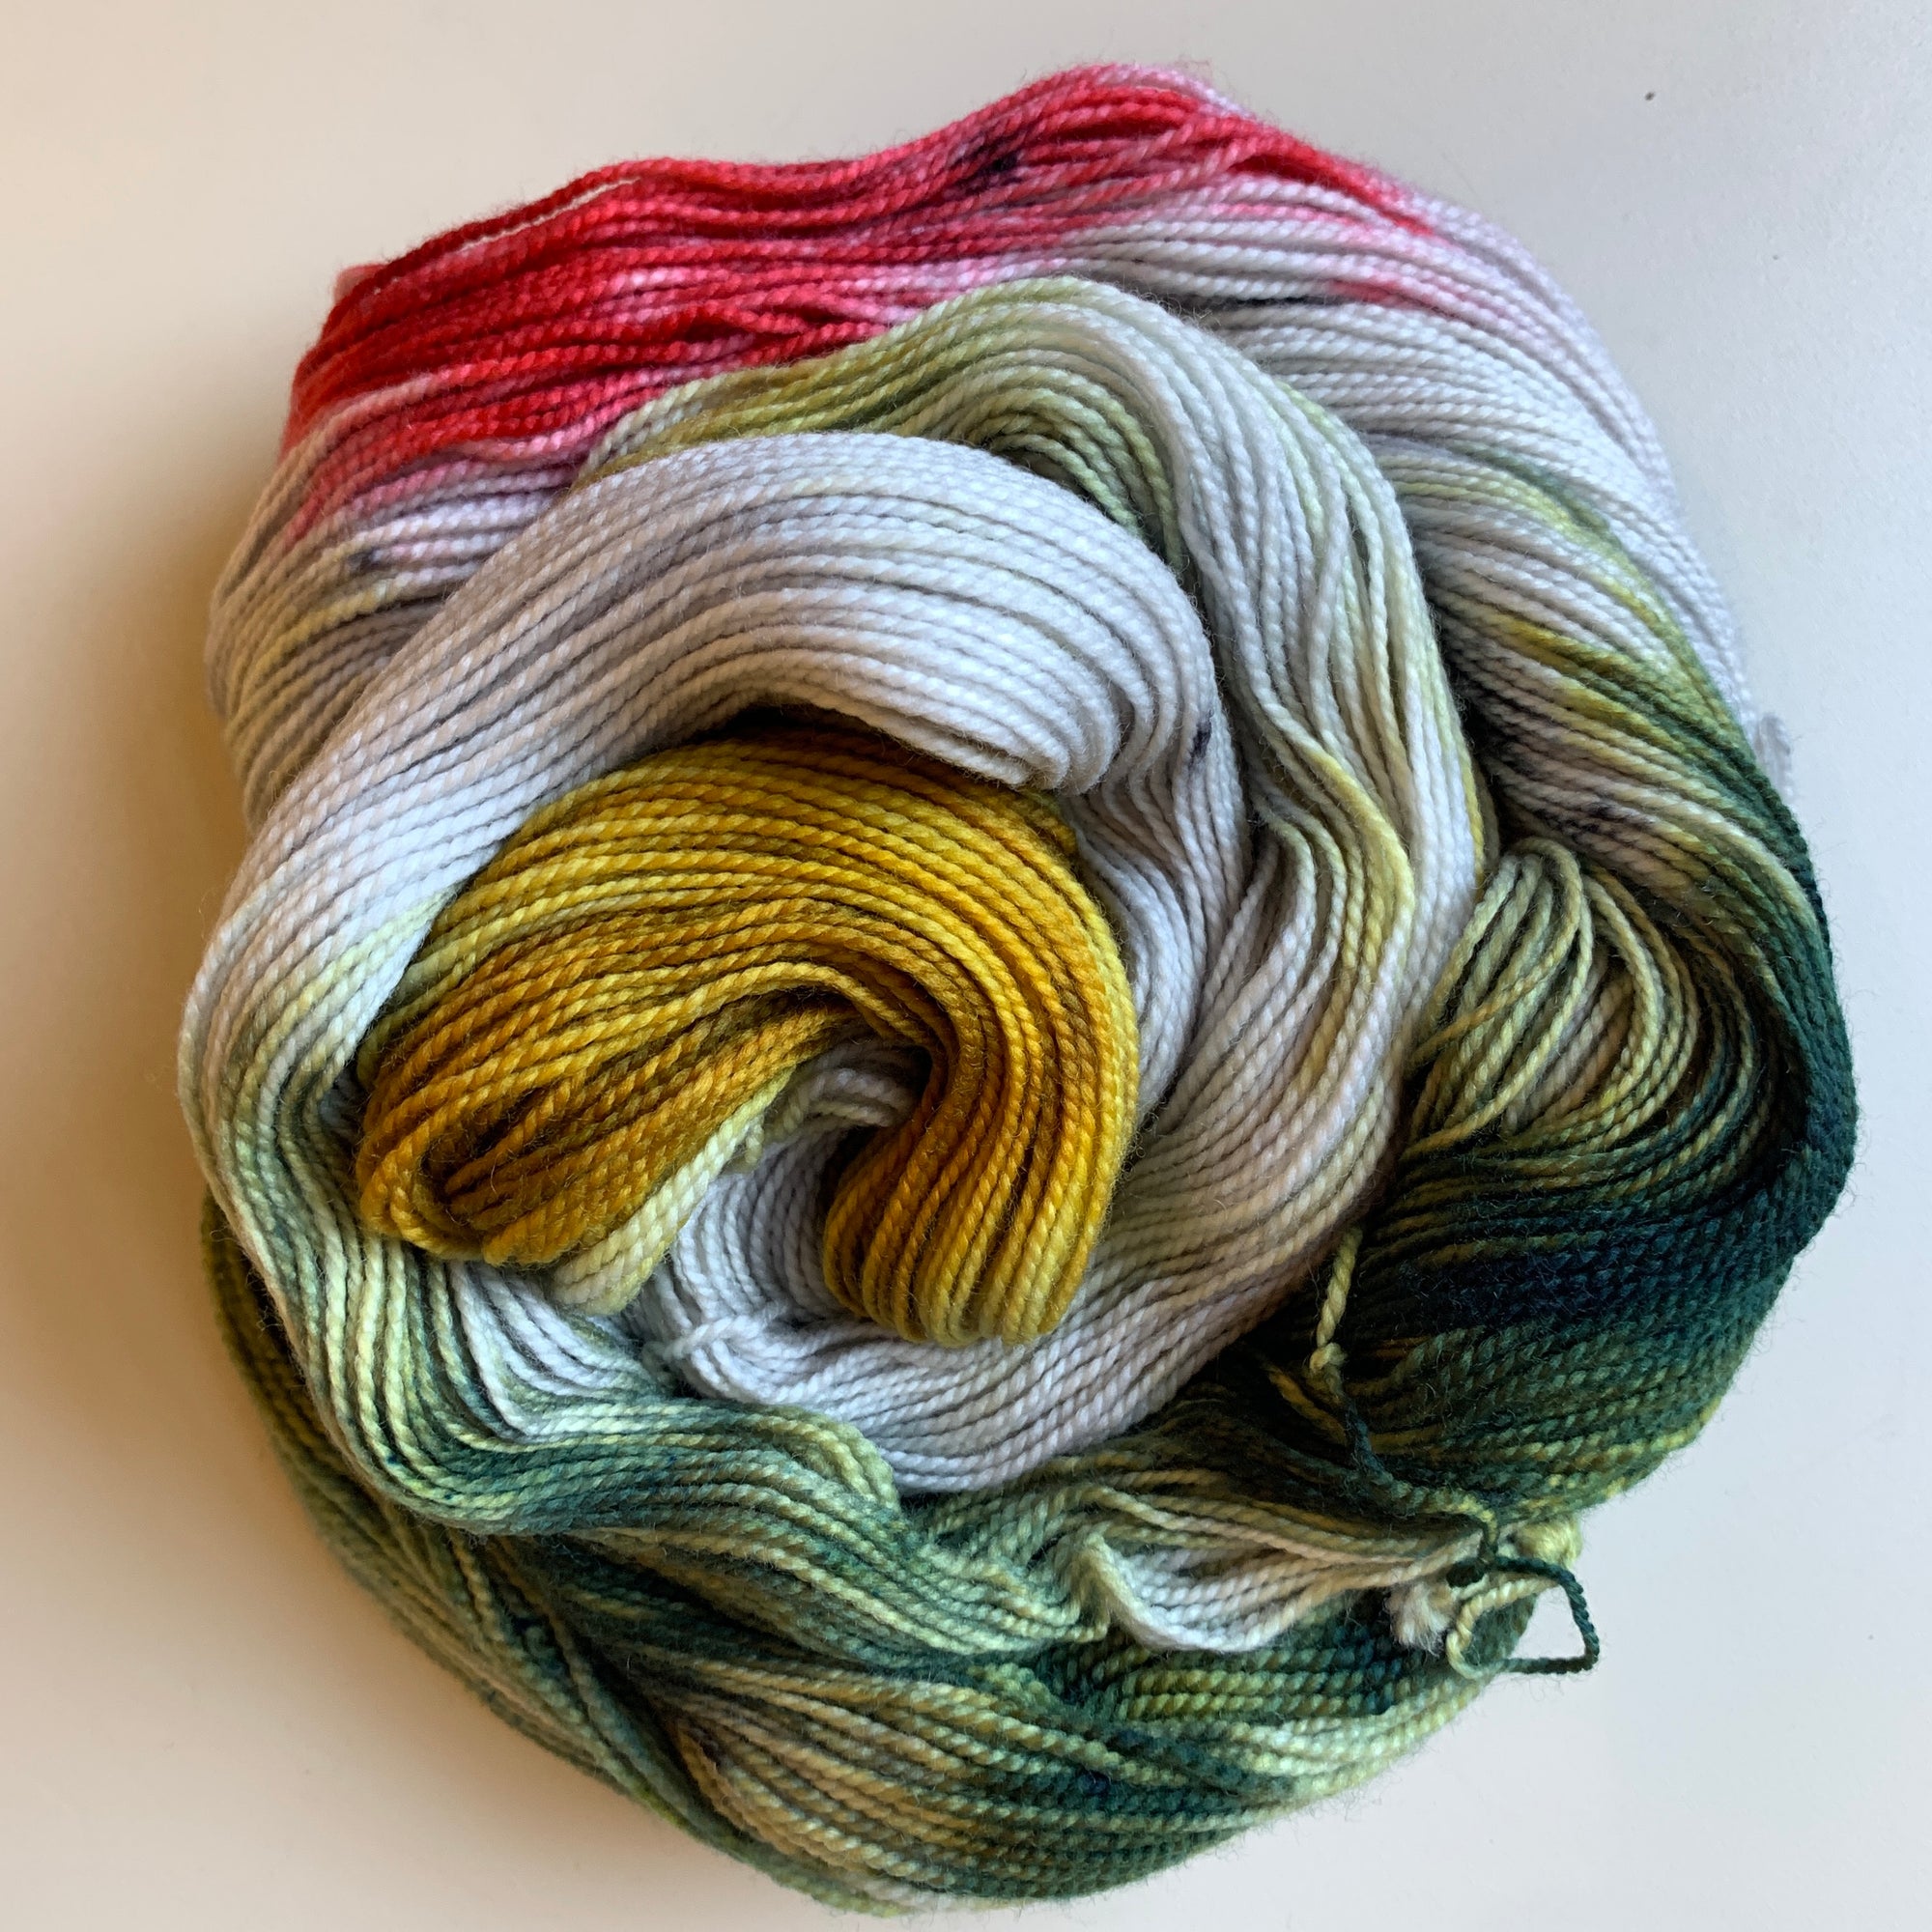 Wool Yarn For Knitting, Crochet & Weaving - Merino & Blend Tagged Lazer  Sheep Yarns - Apricot Yarn & Supply